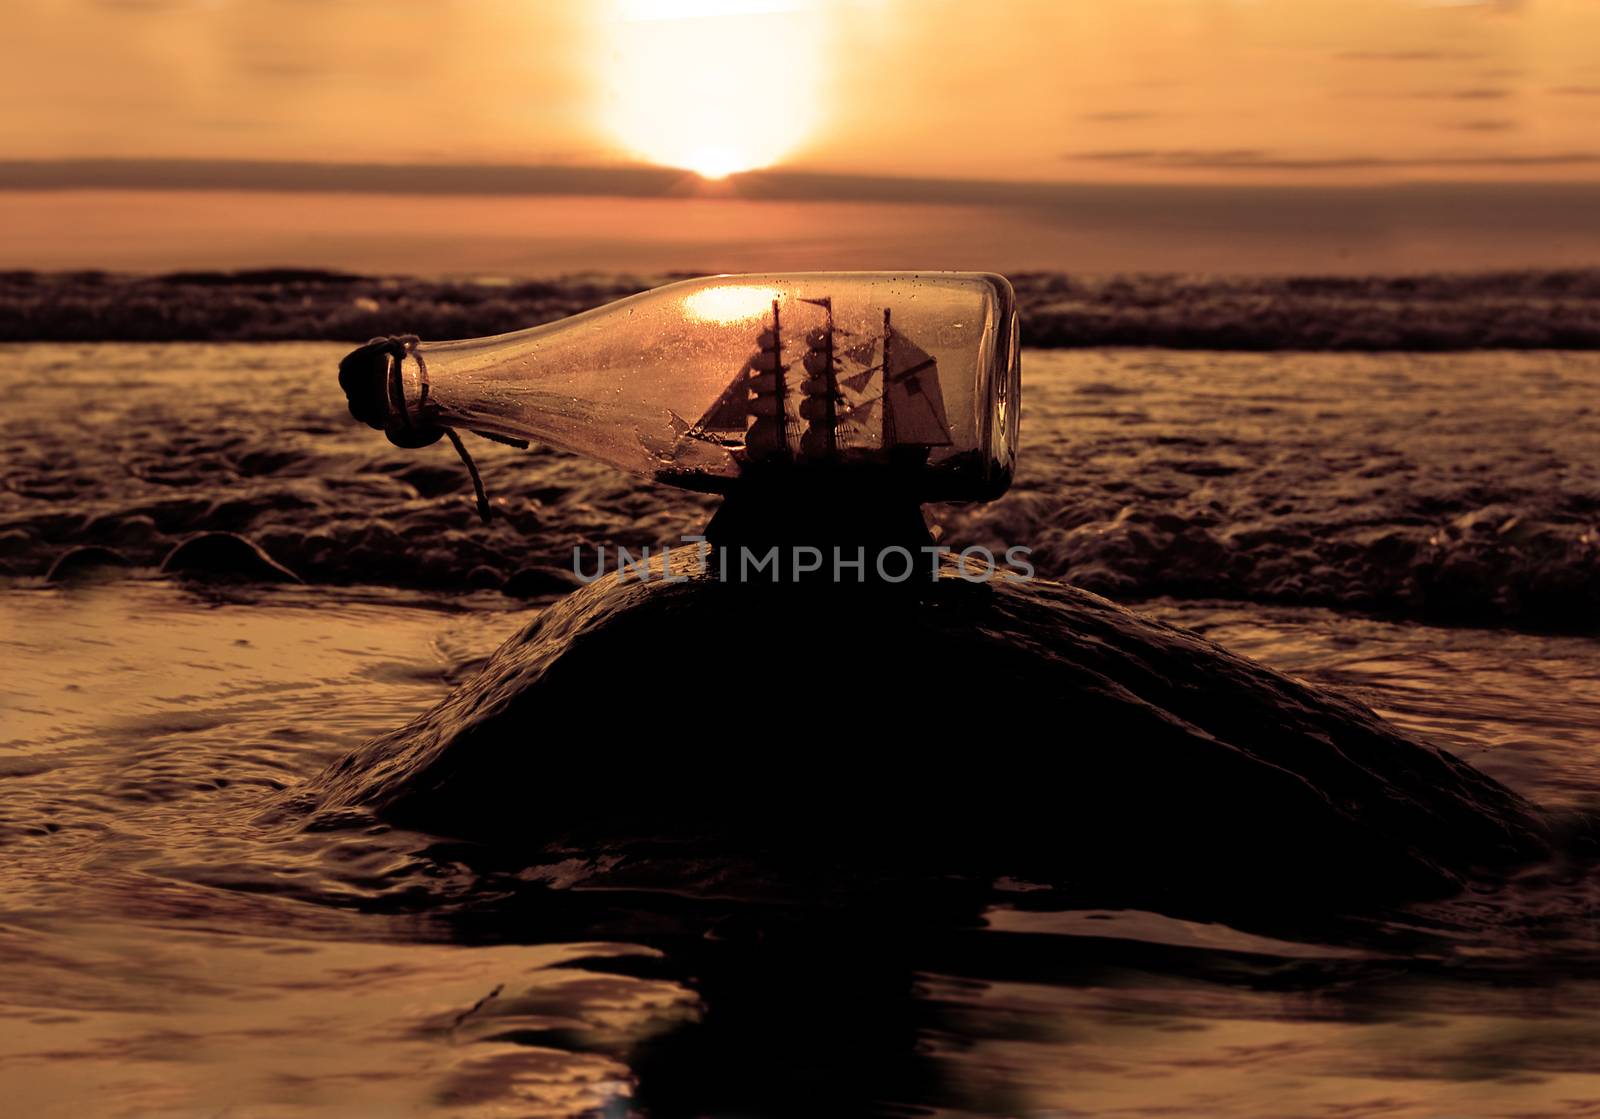 Souvenir conceptual image. Ship in a bottle against sea at sundown in summer.